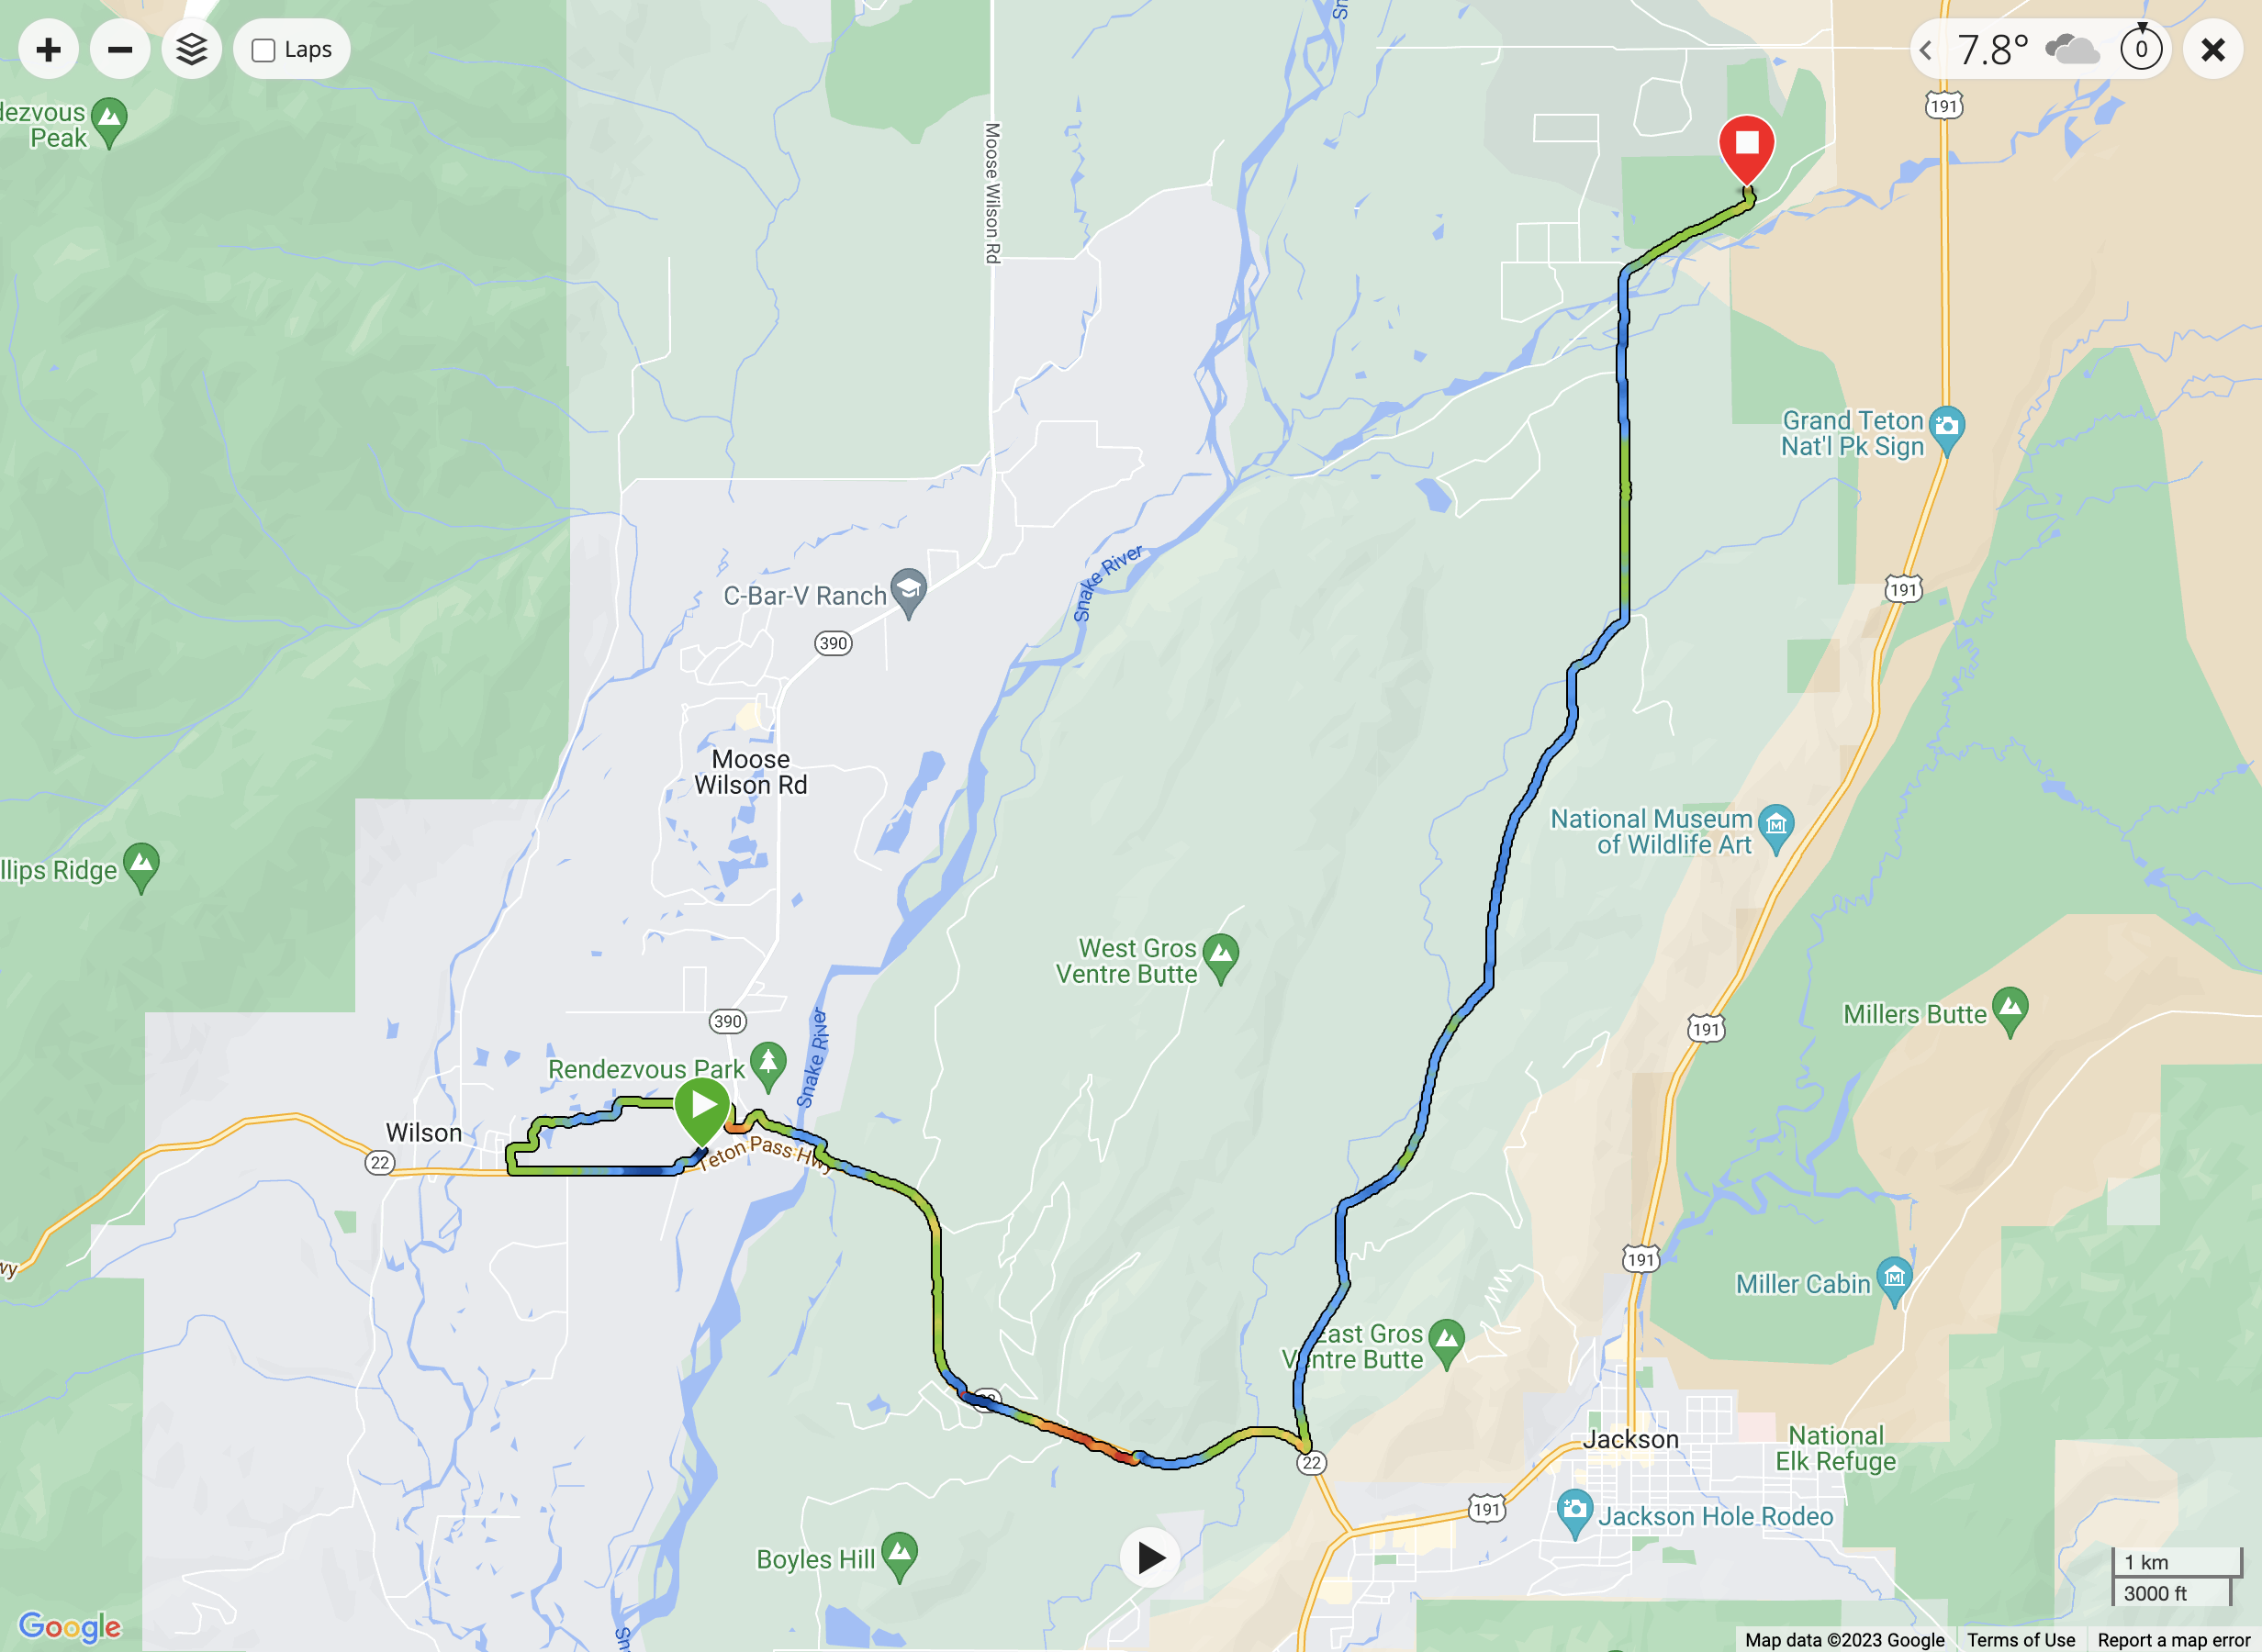 A screenshot of a Google Maps view of the route of the Grand Teton Half Marathon.